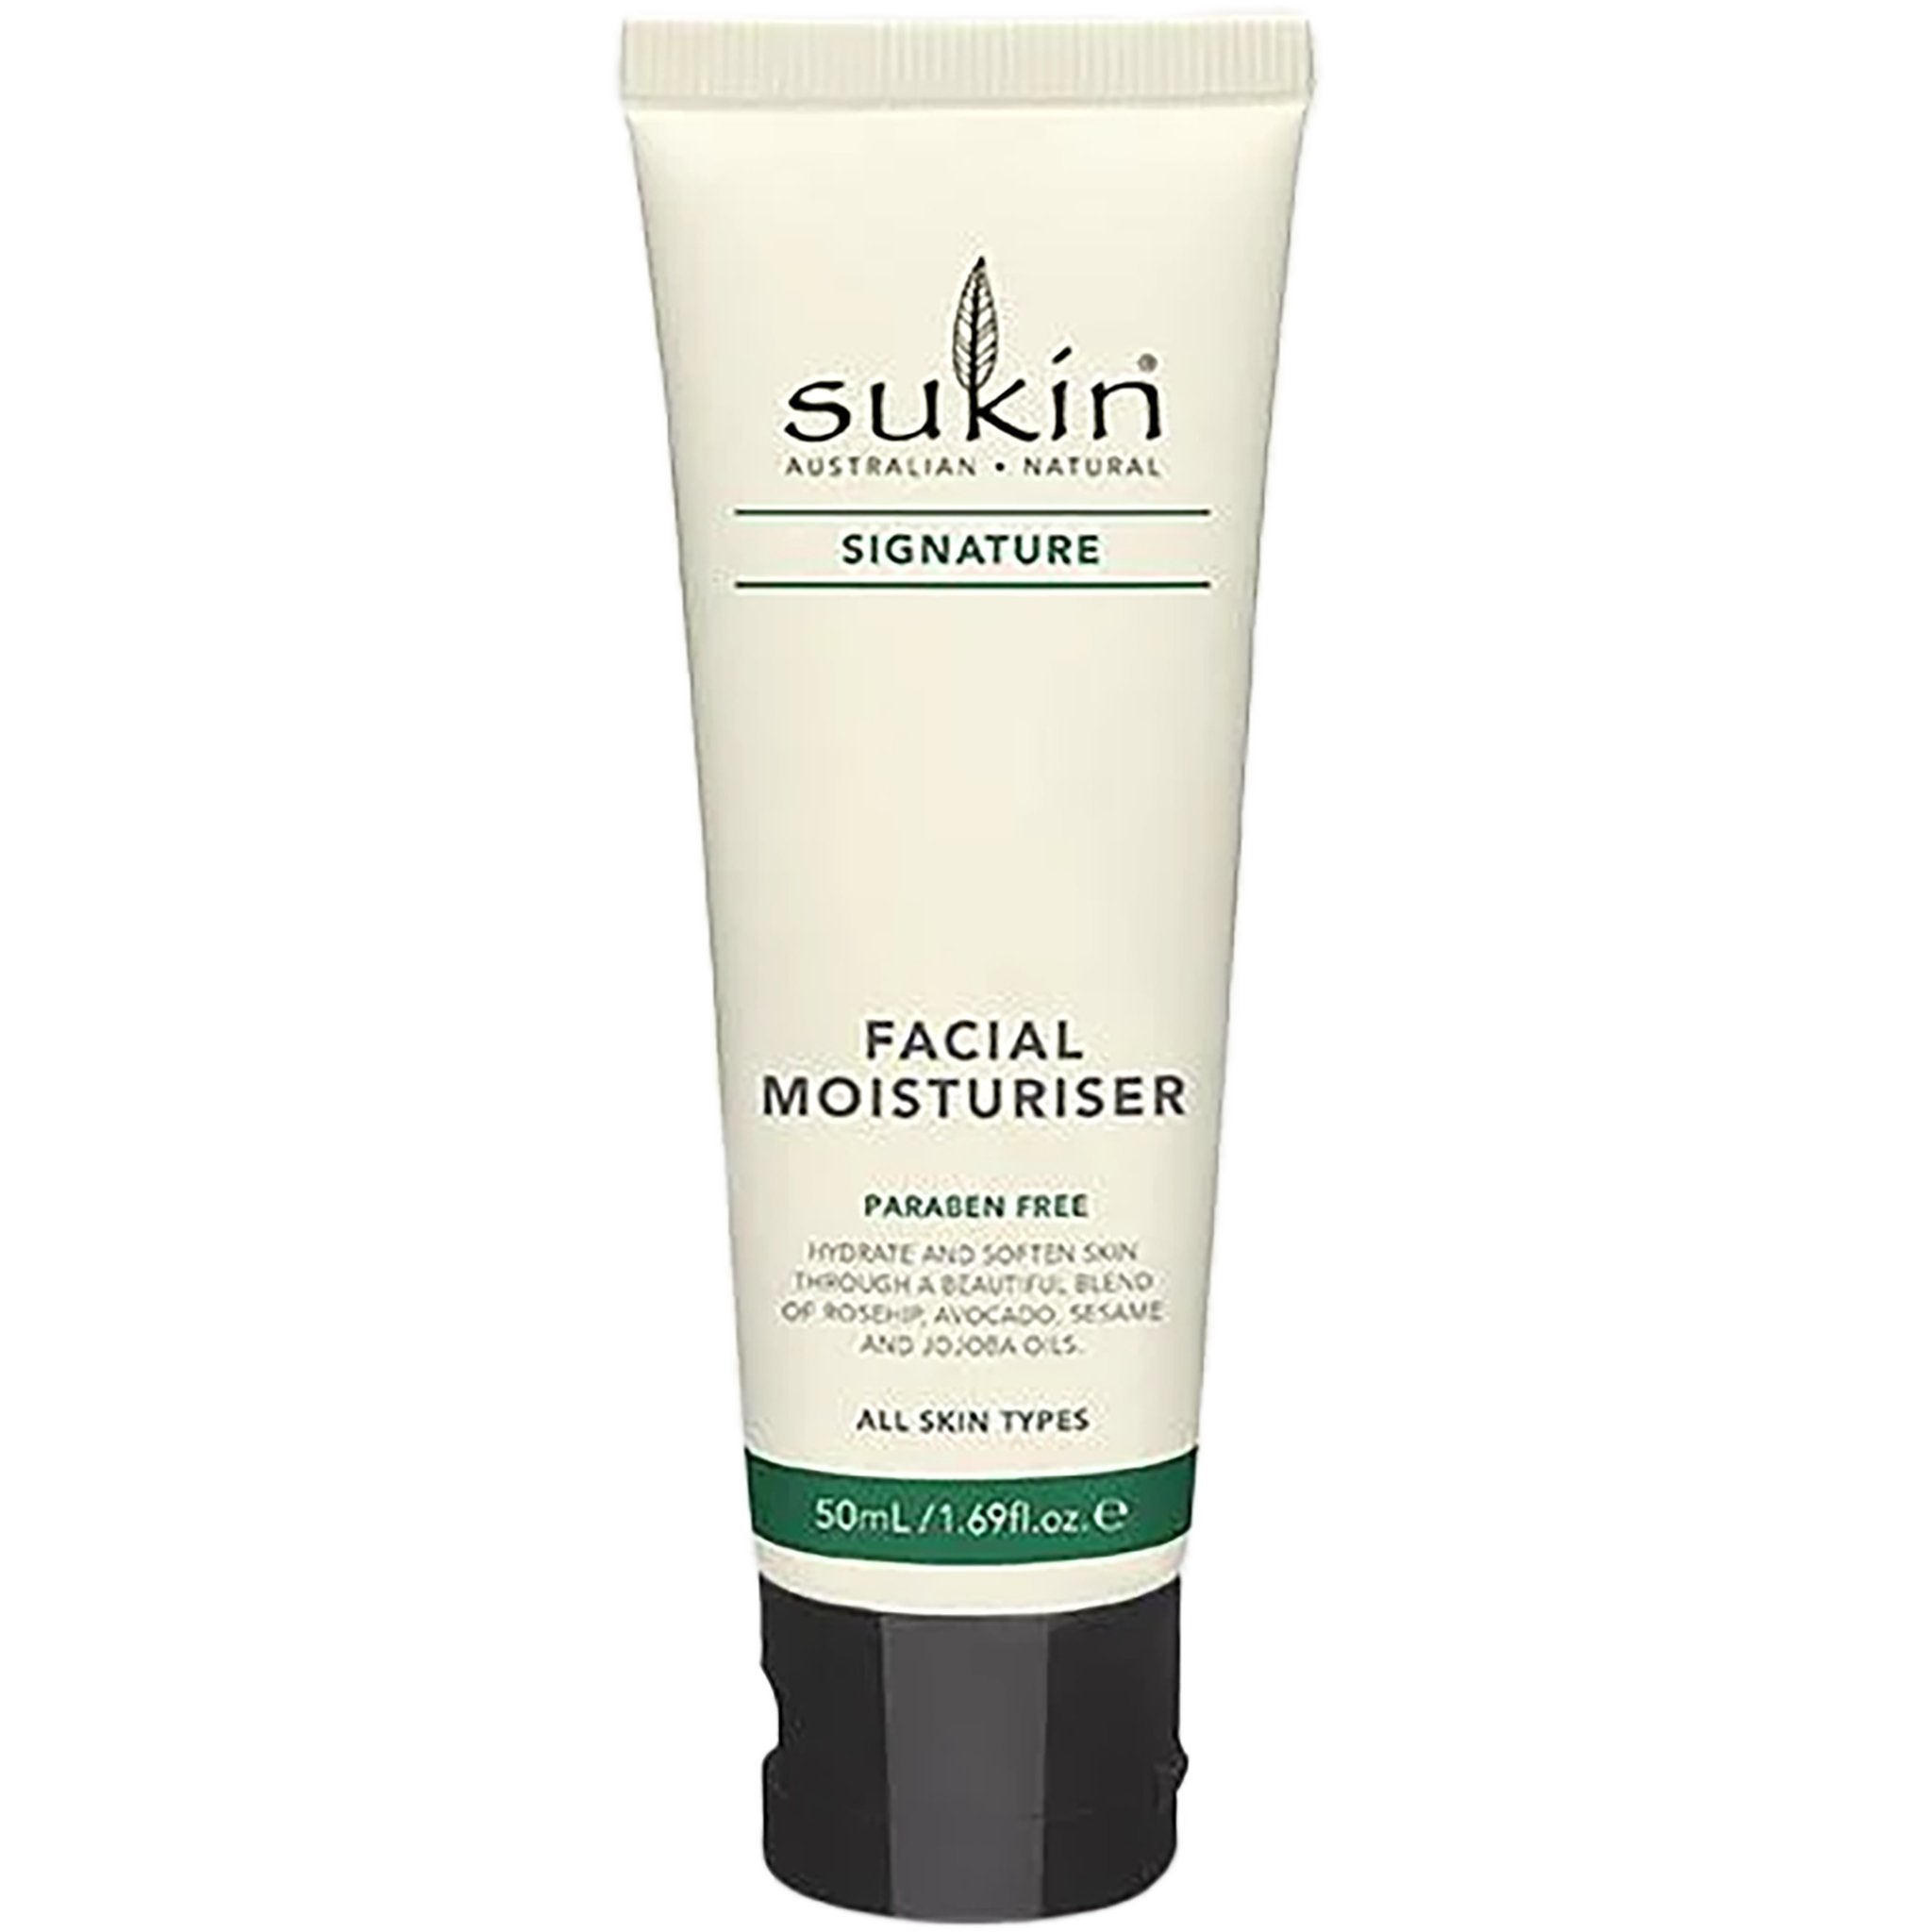 Sukin Facial Moisturiser 20ml - Free with £60 Spend - mypure.co.uk